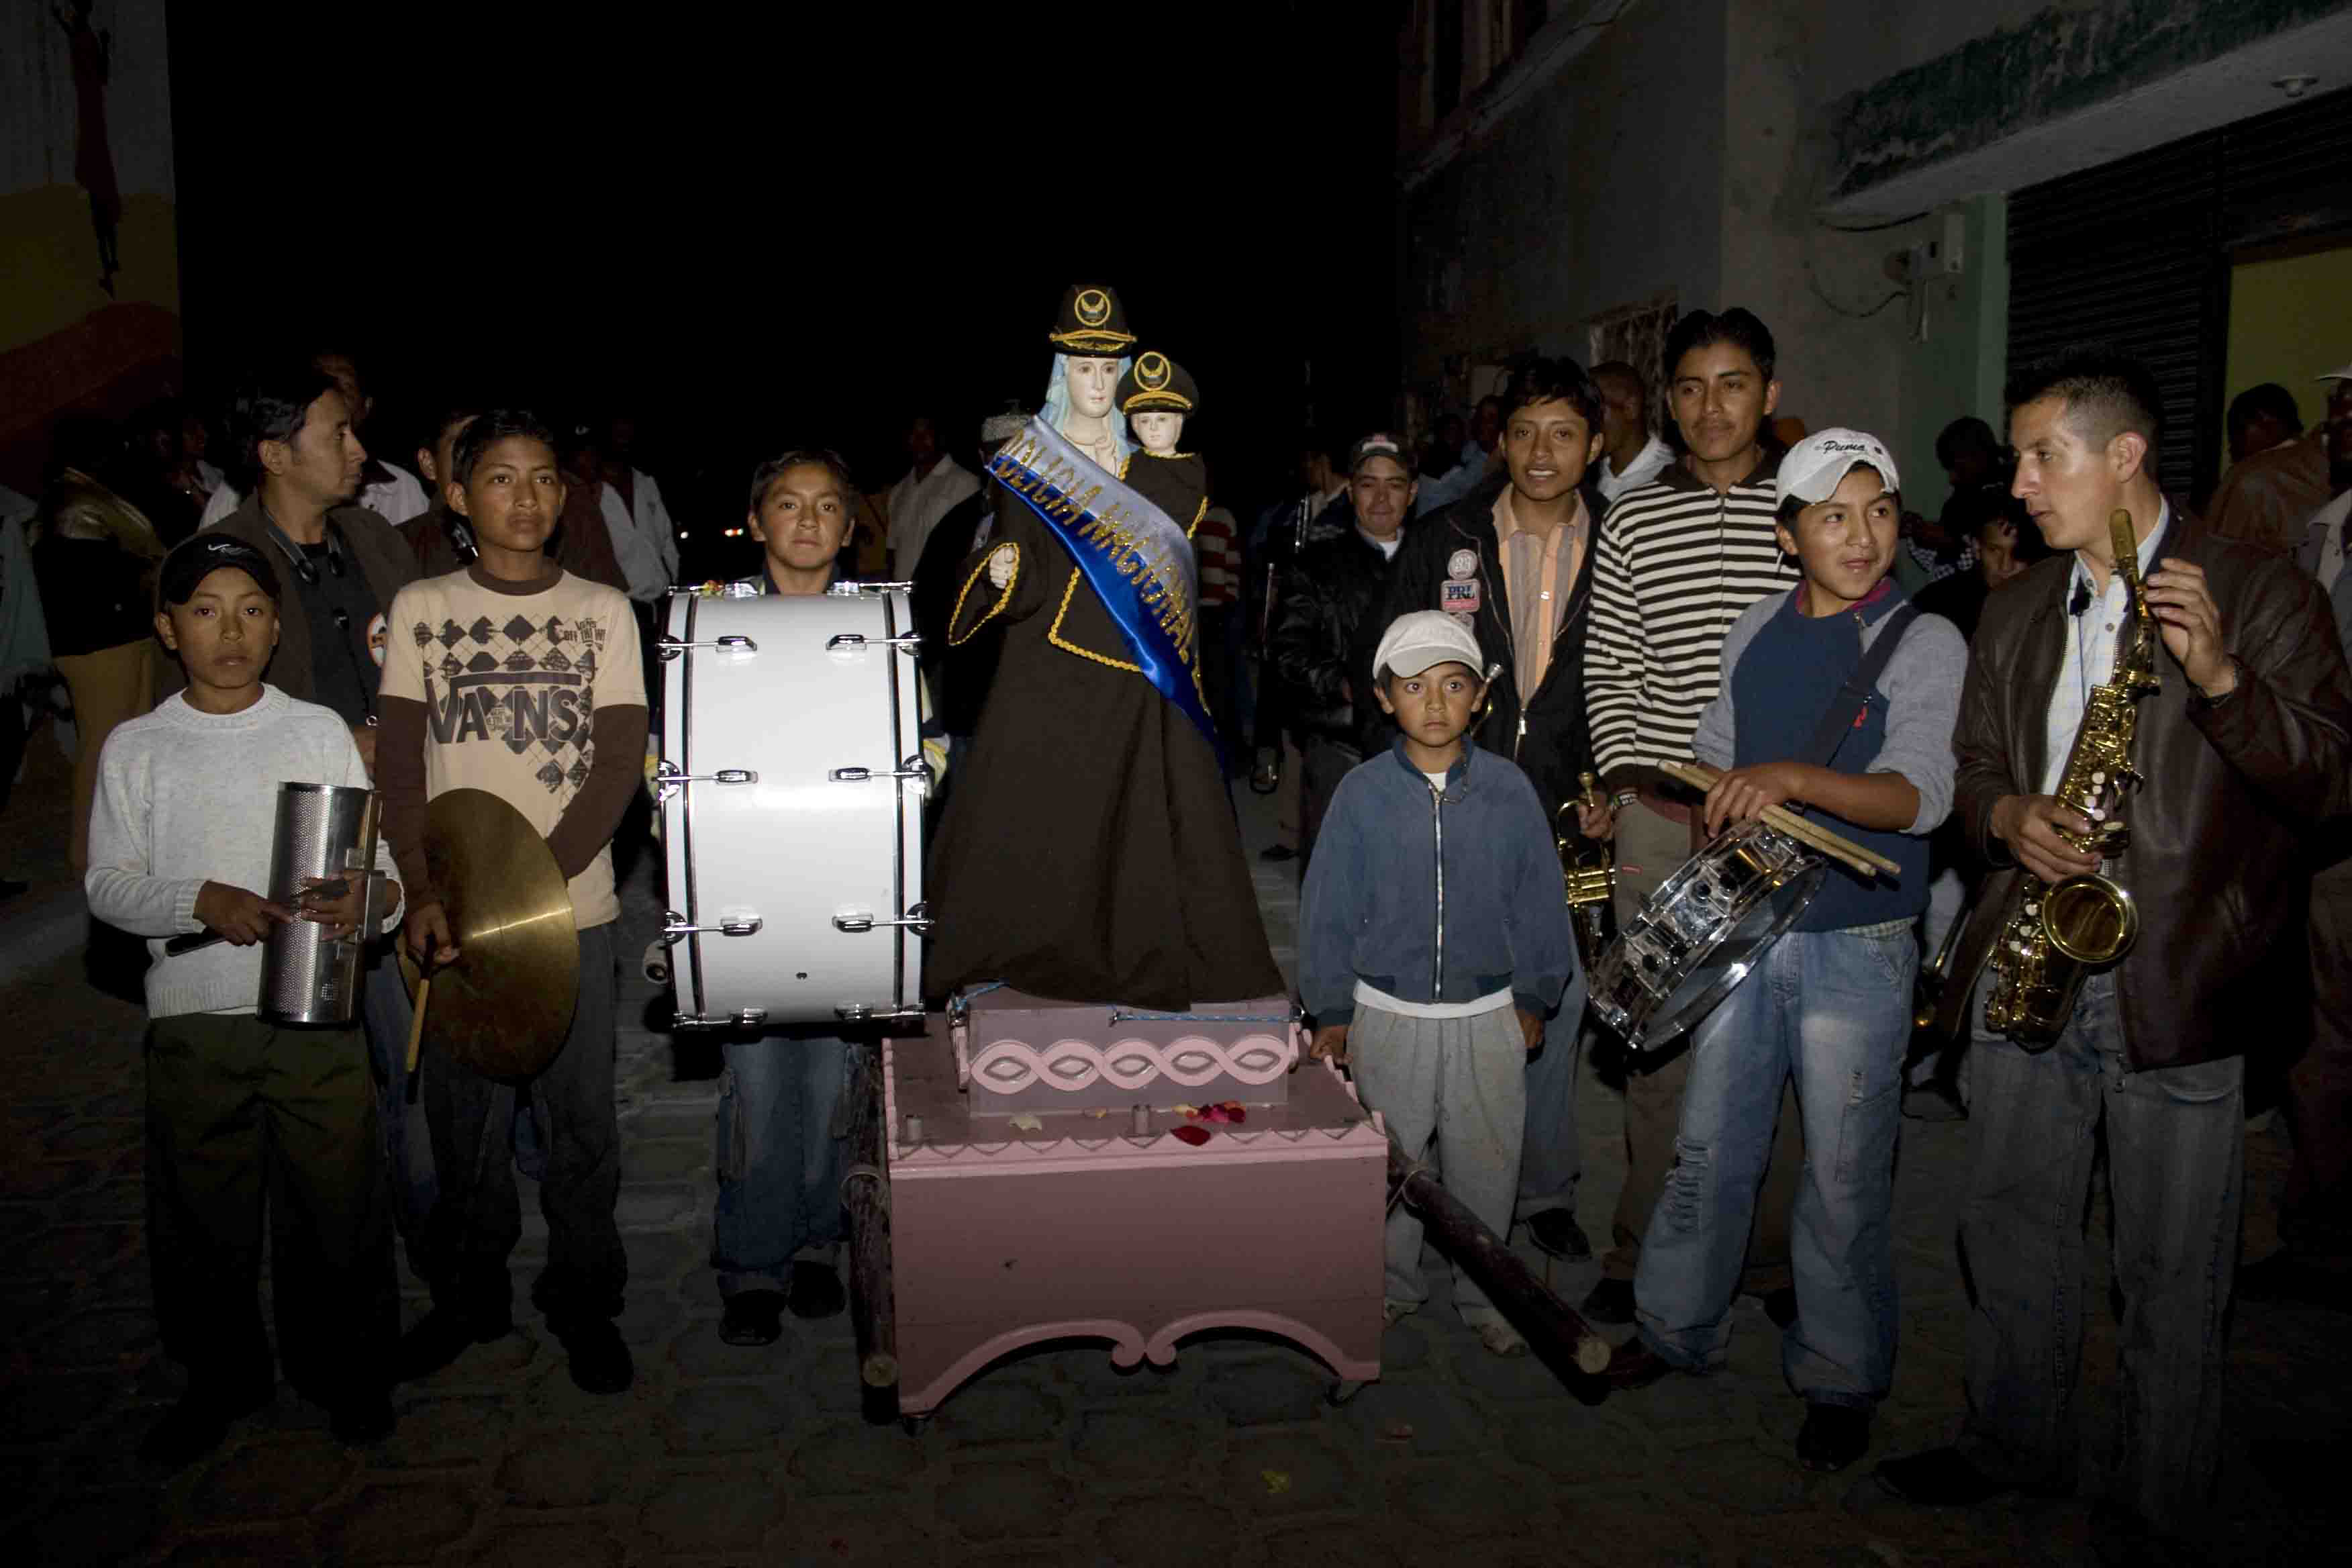 Celebration Virgen de las Nieves-Chota community. Religious festivity. 